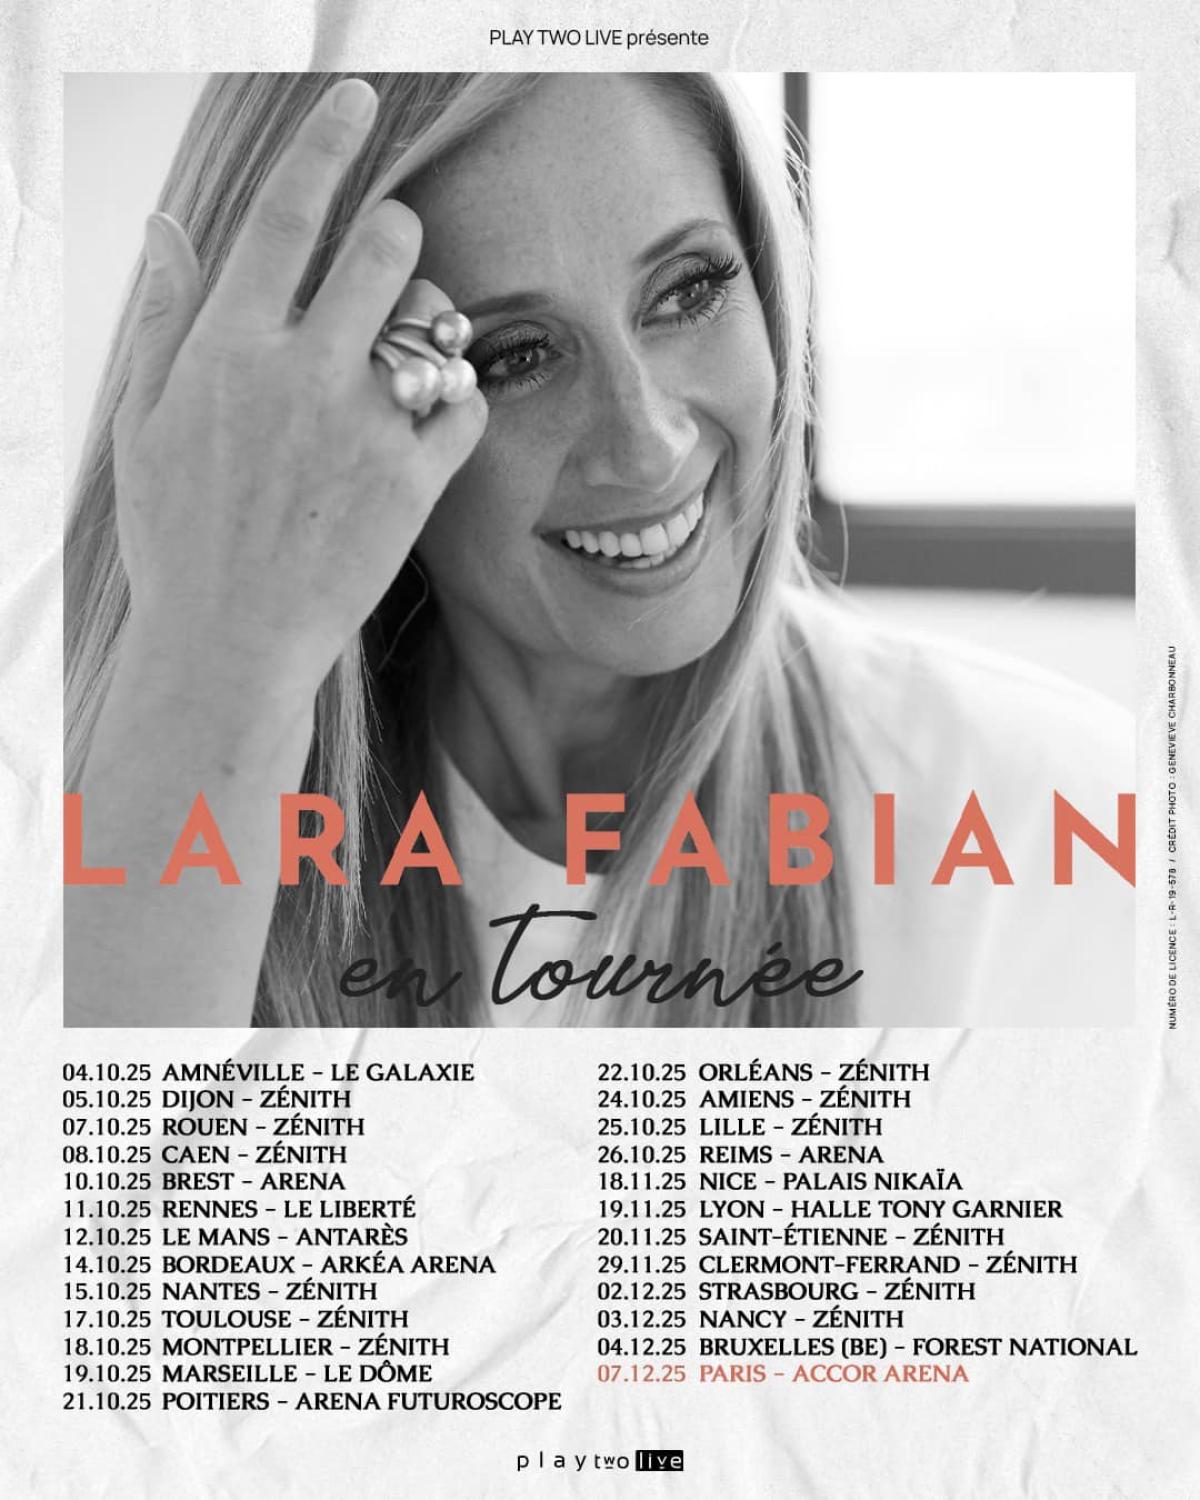 Lara Fabian in der Arena Futuroscope Tickets